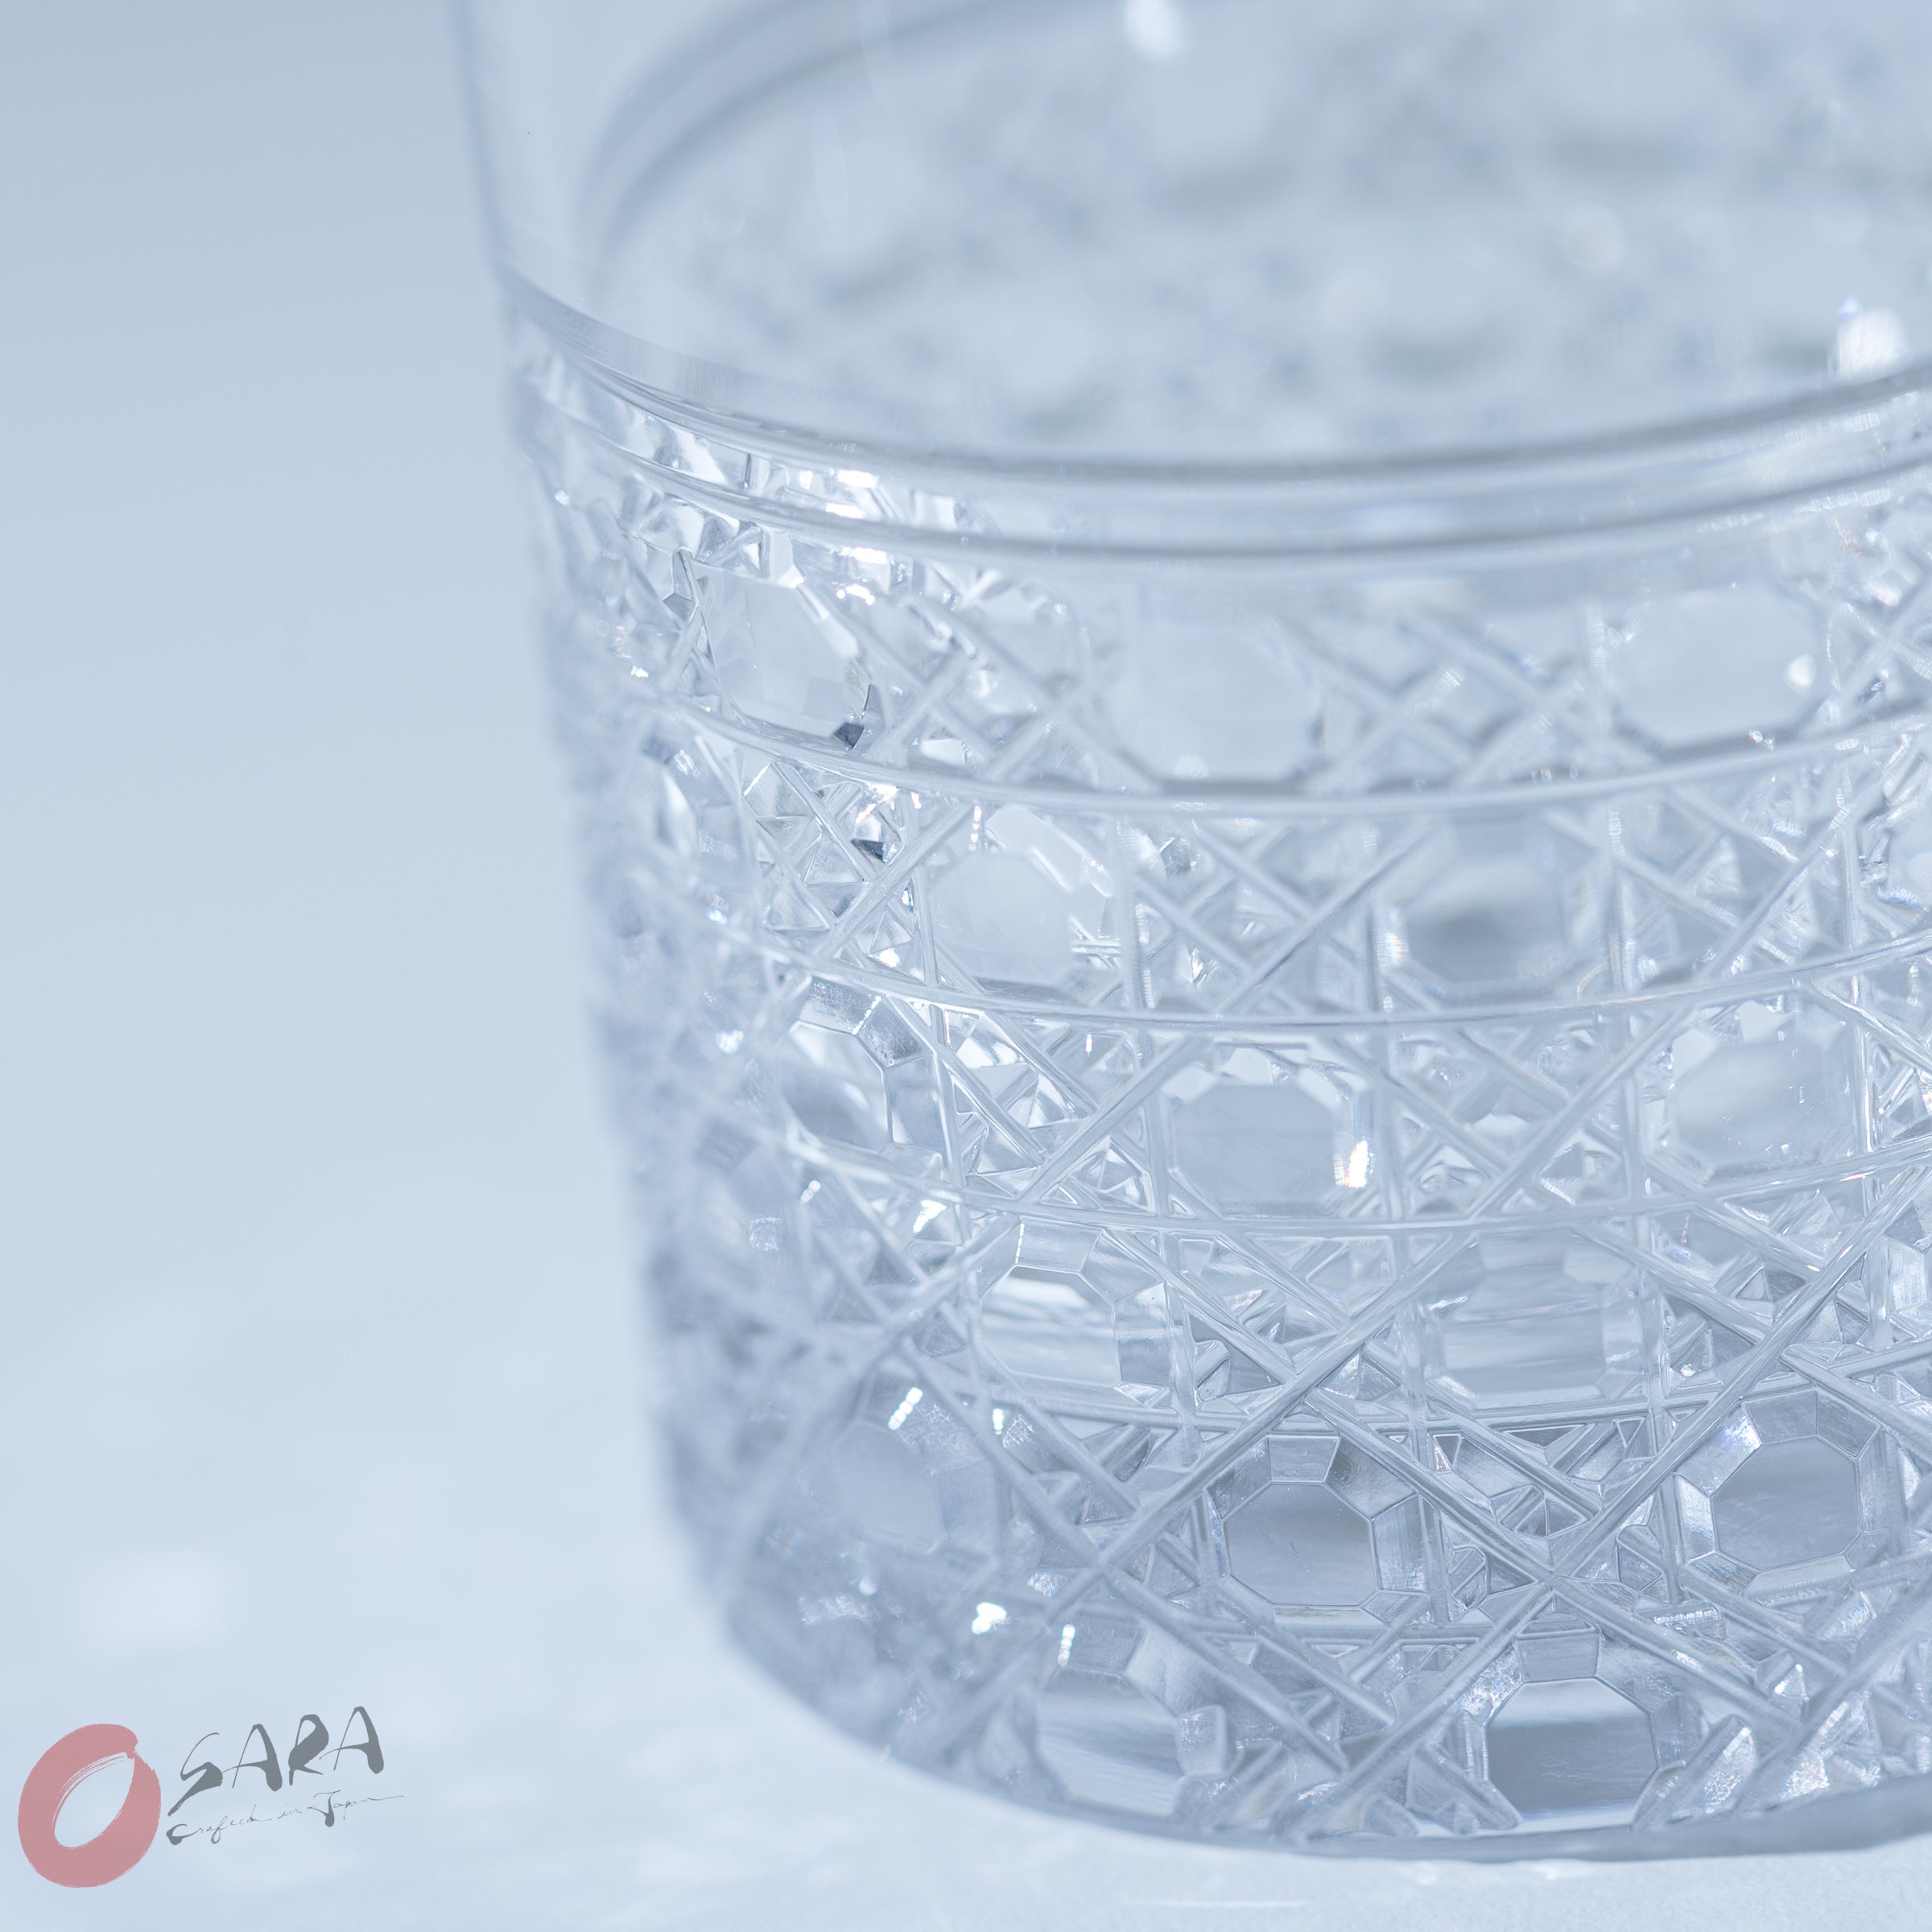 KAGAMI Crystal Japanese Handmade Double Whiskey Glass - 100ml / Kagome